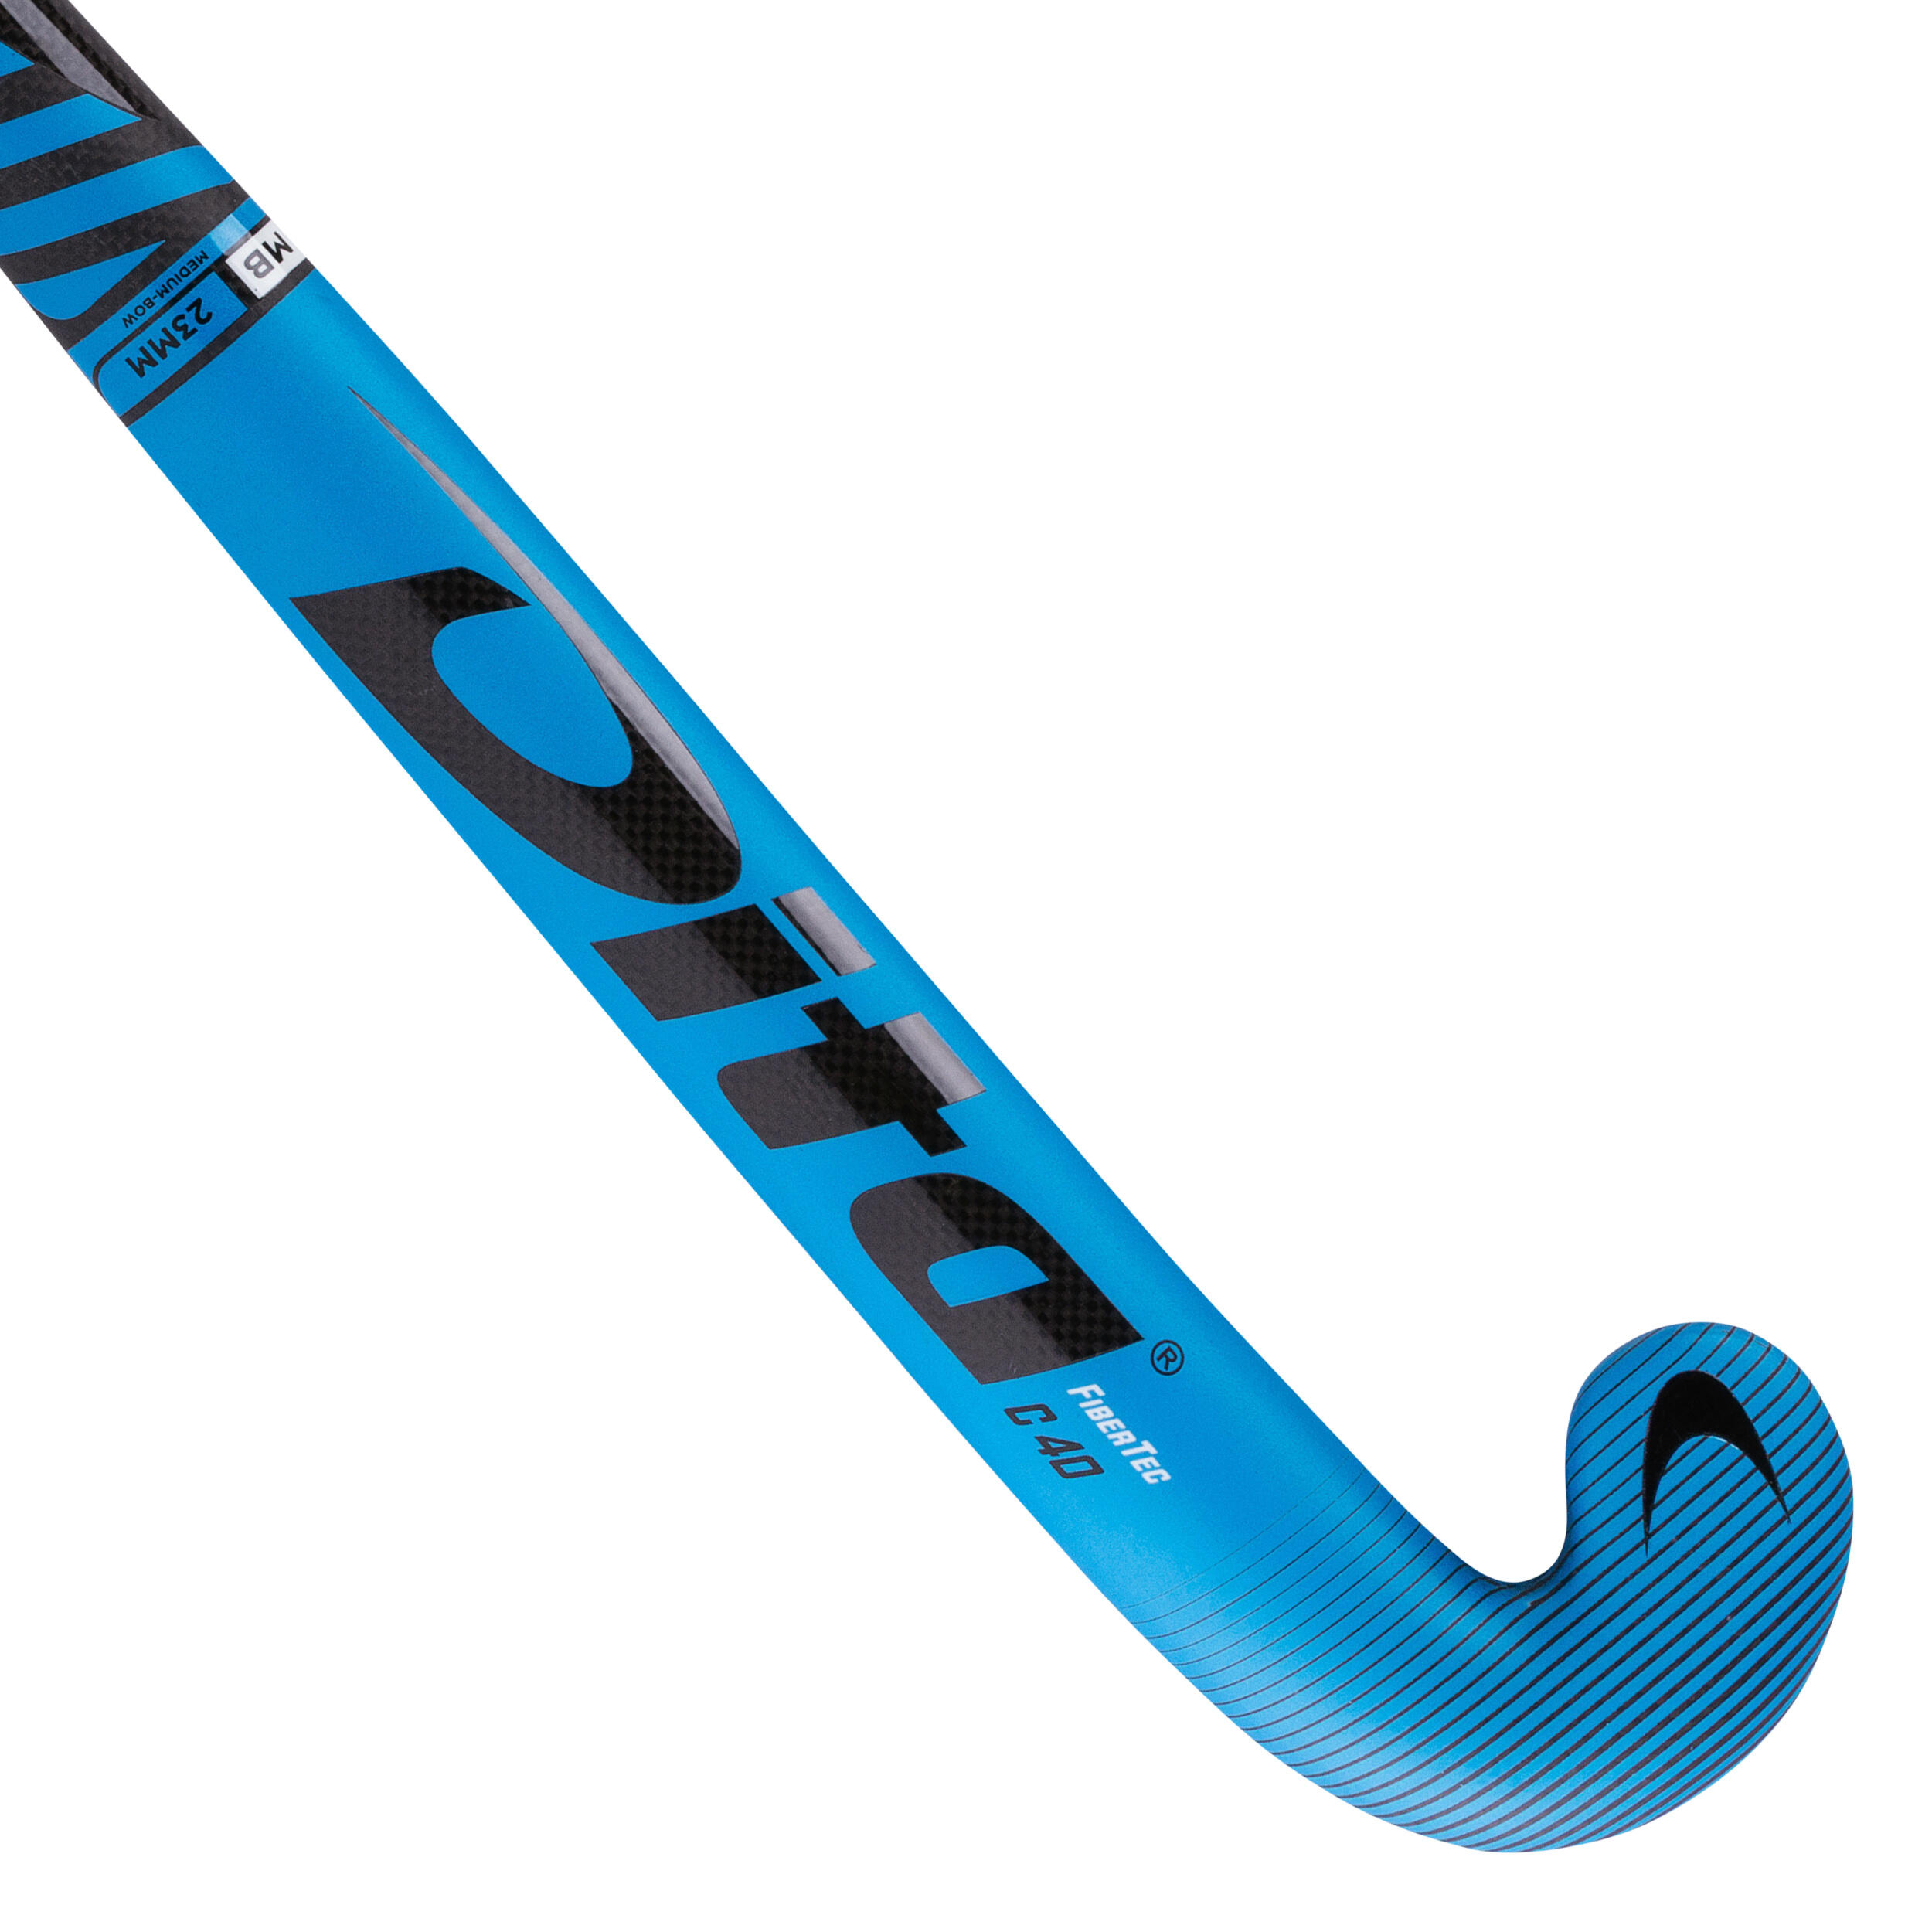 Intermediate 40% Carbon Mid Bow Field Hockey Stick FiberTecC40 - Blue 9/12